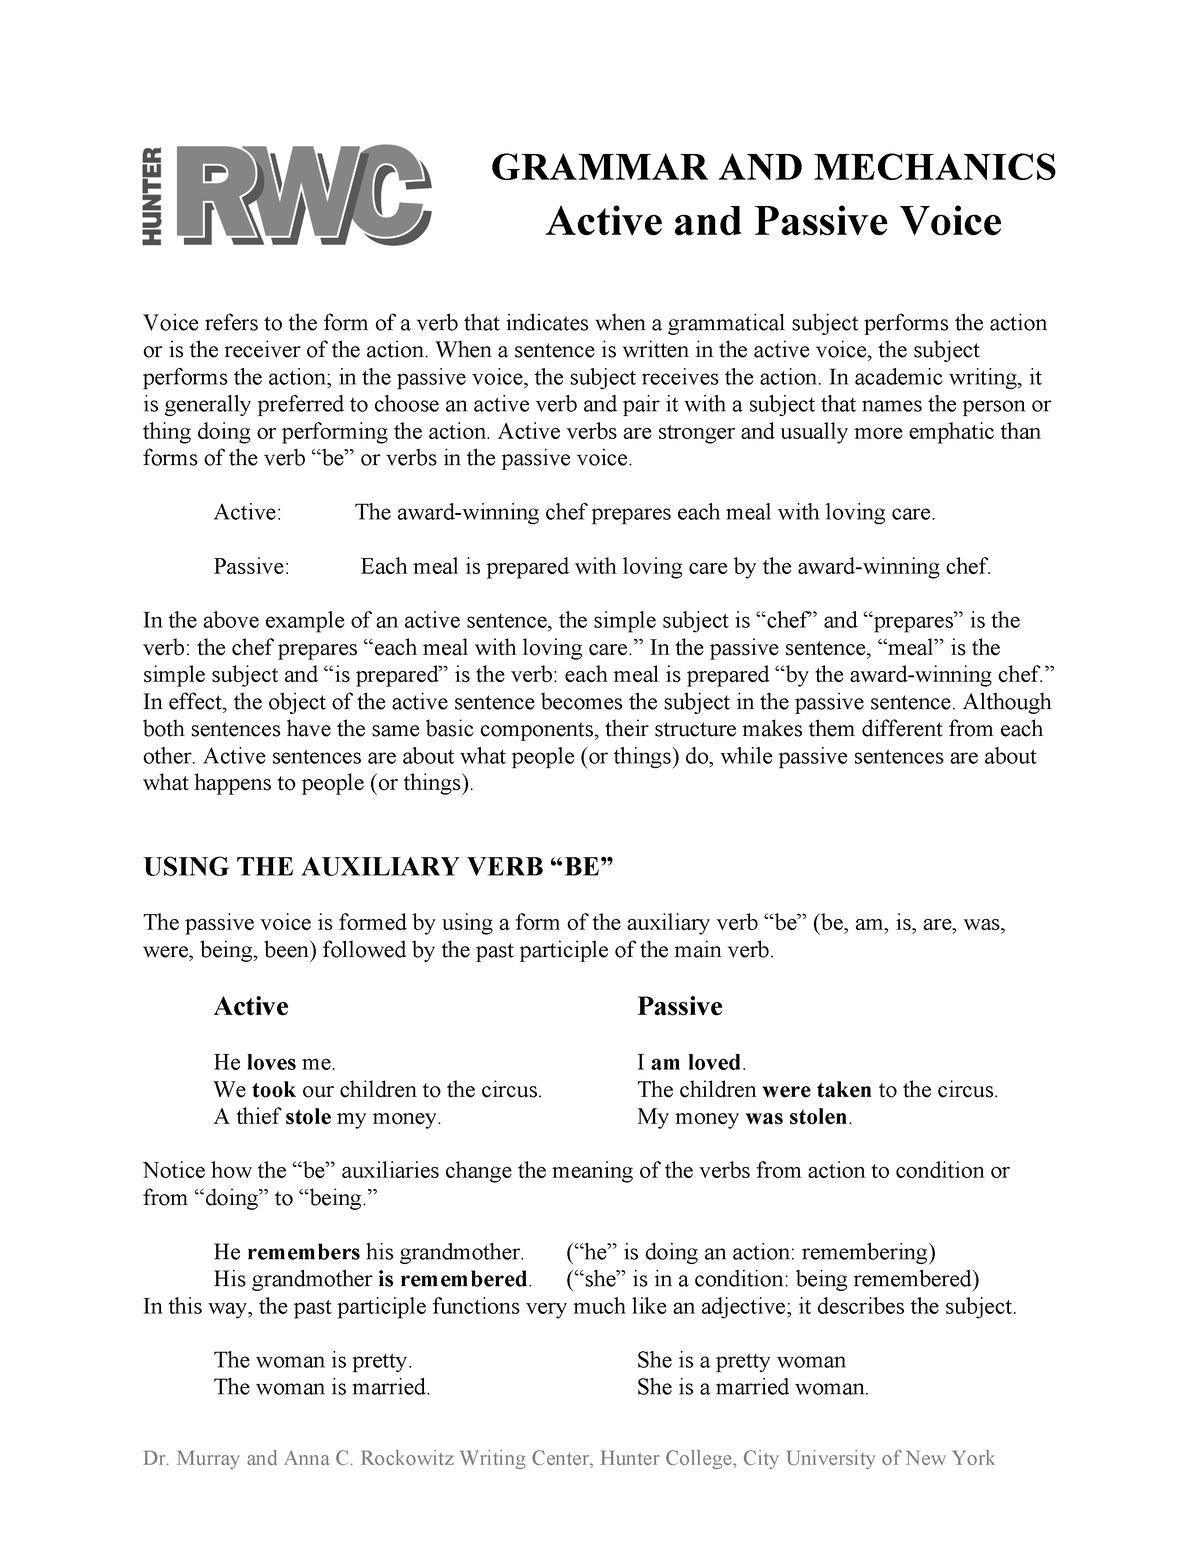 Active and Passive Voice - Literature - Studocu